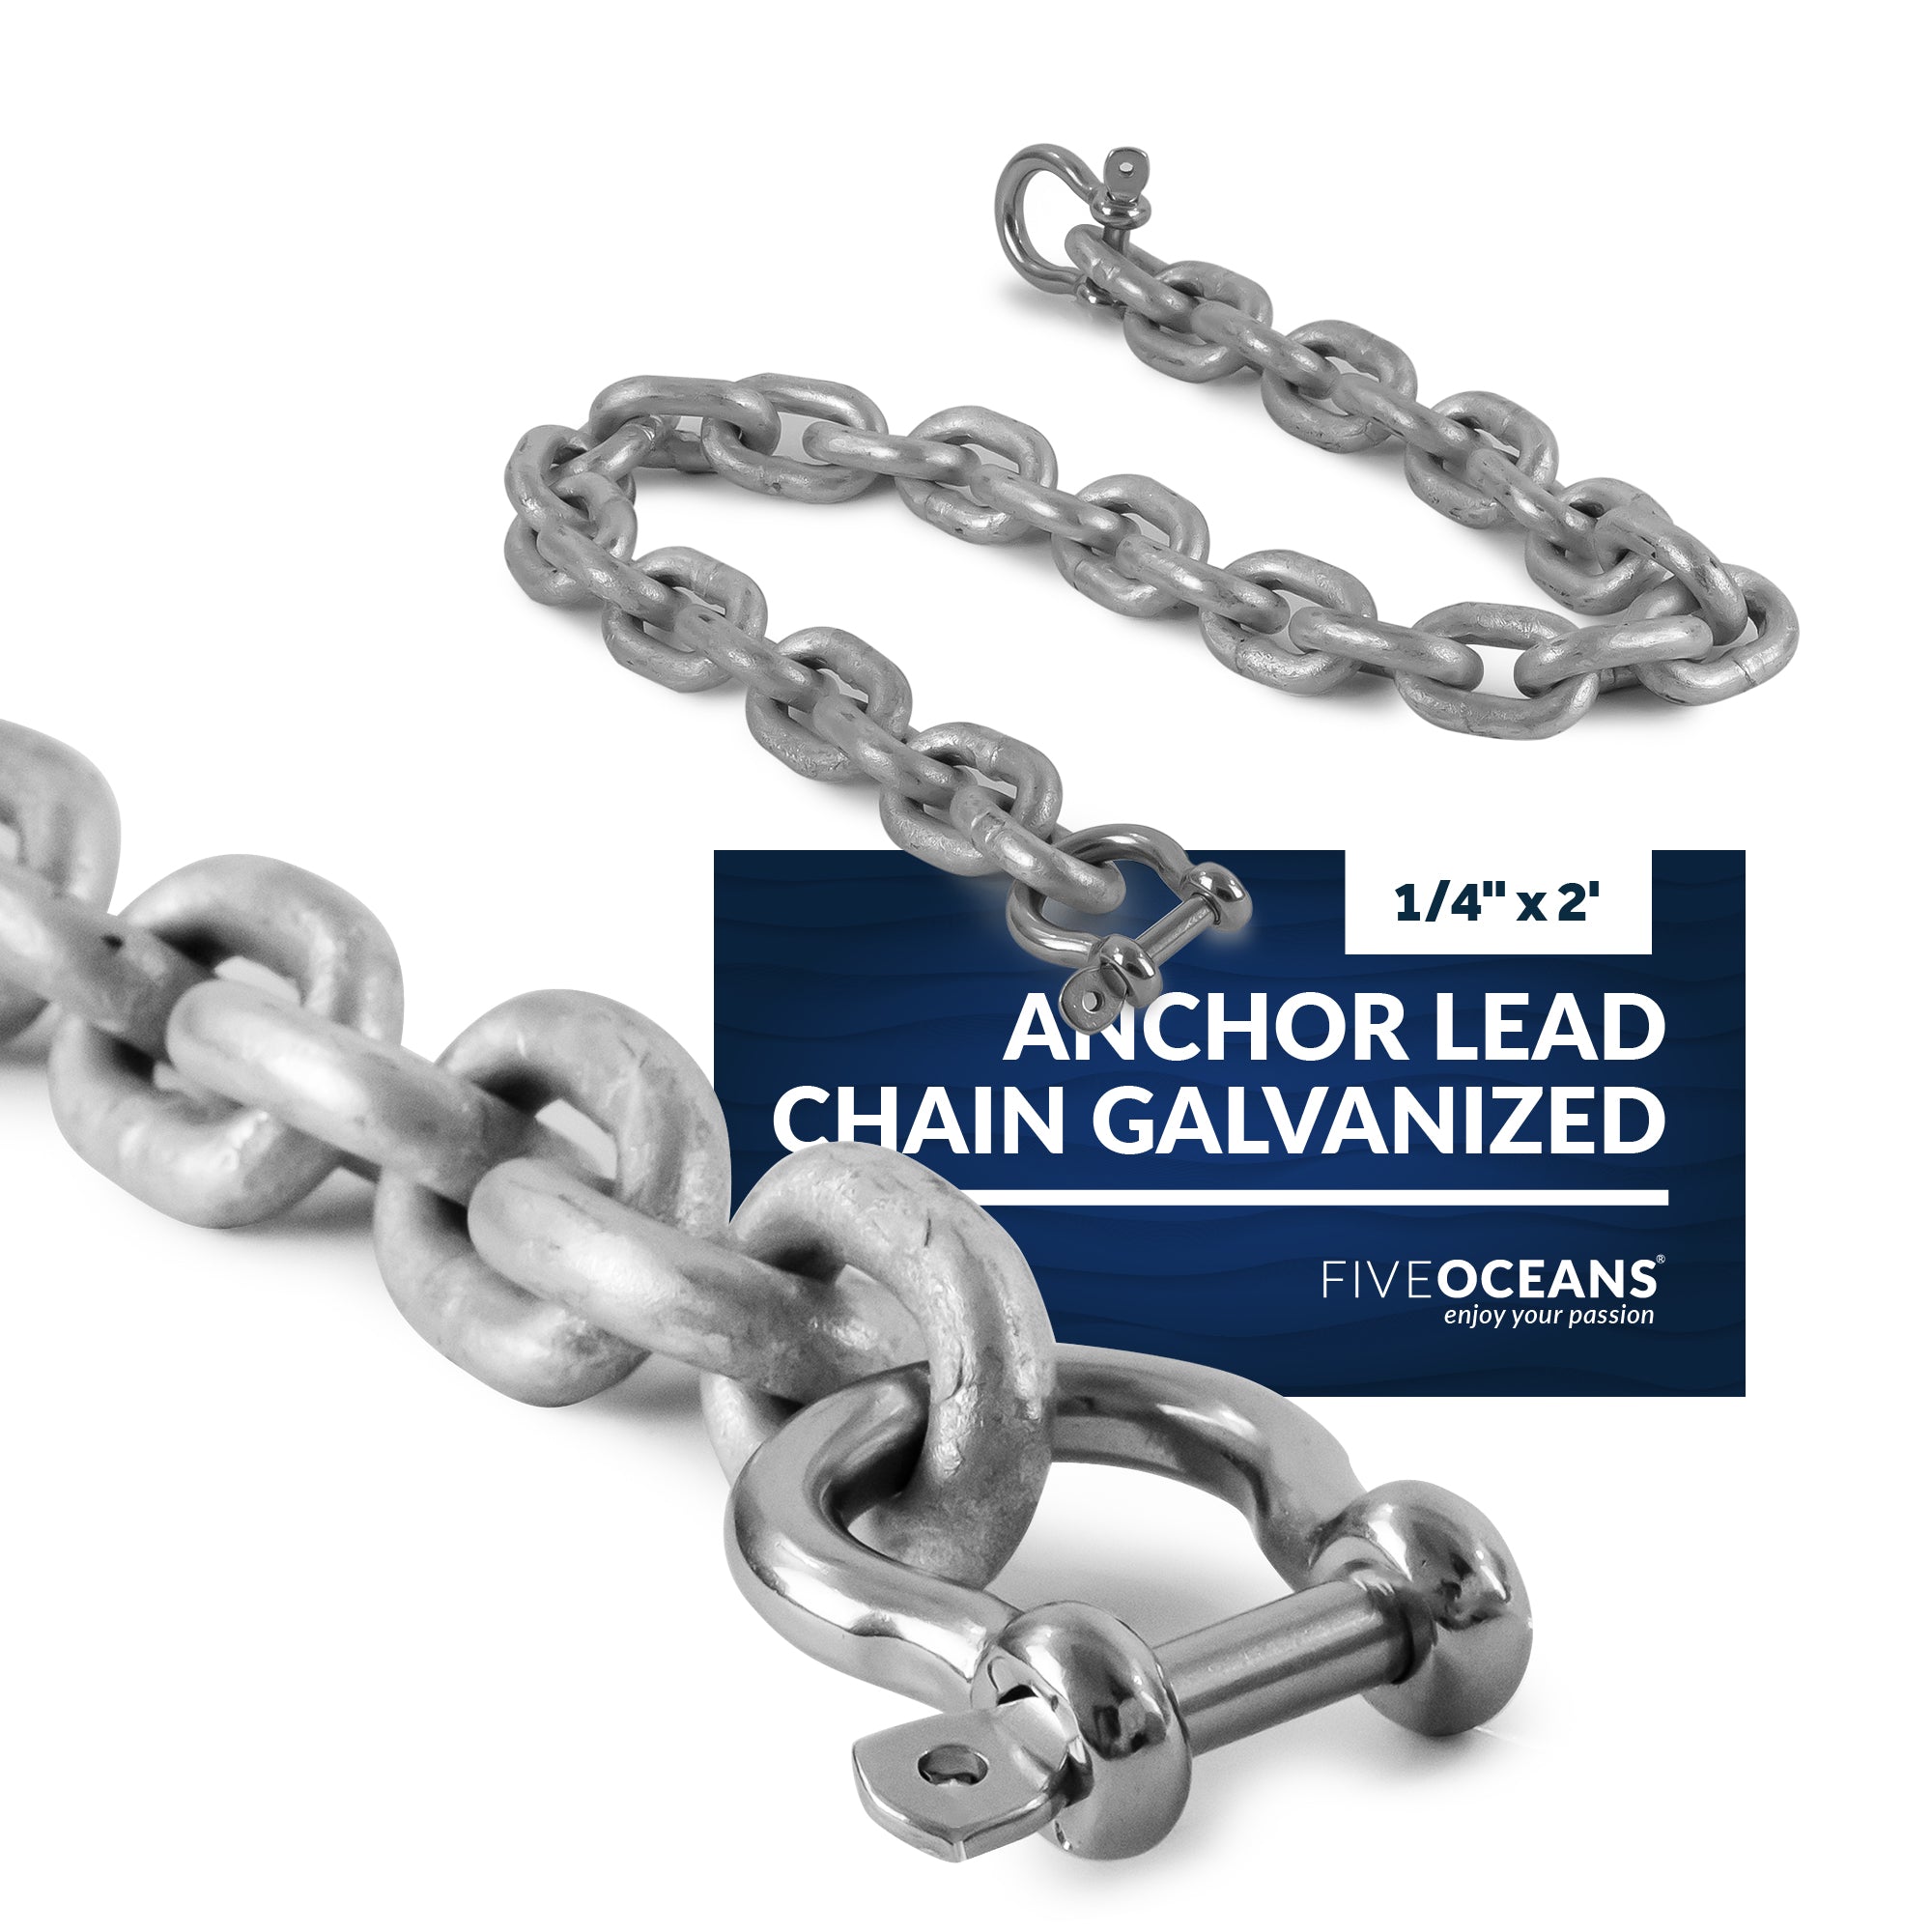 Anchor Lead Chain 1/4" x 2', HTG4 Galvanized Steel - FO4489-G2